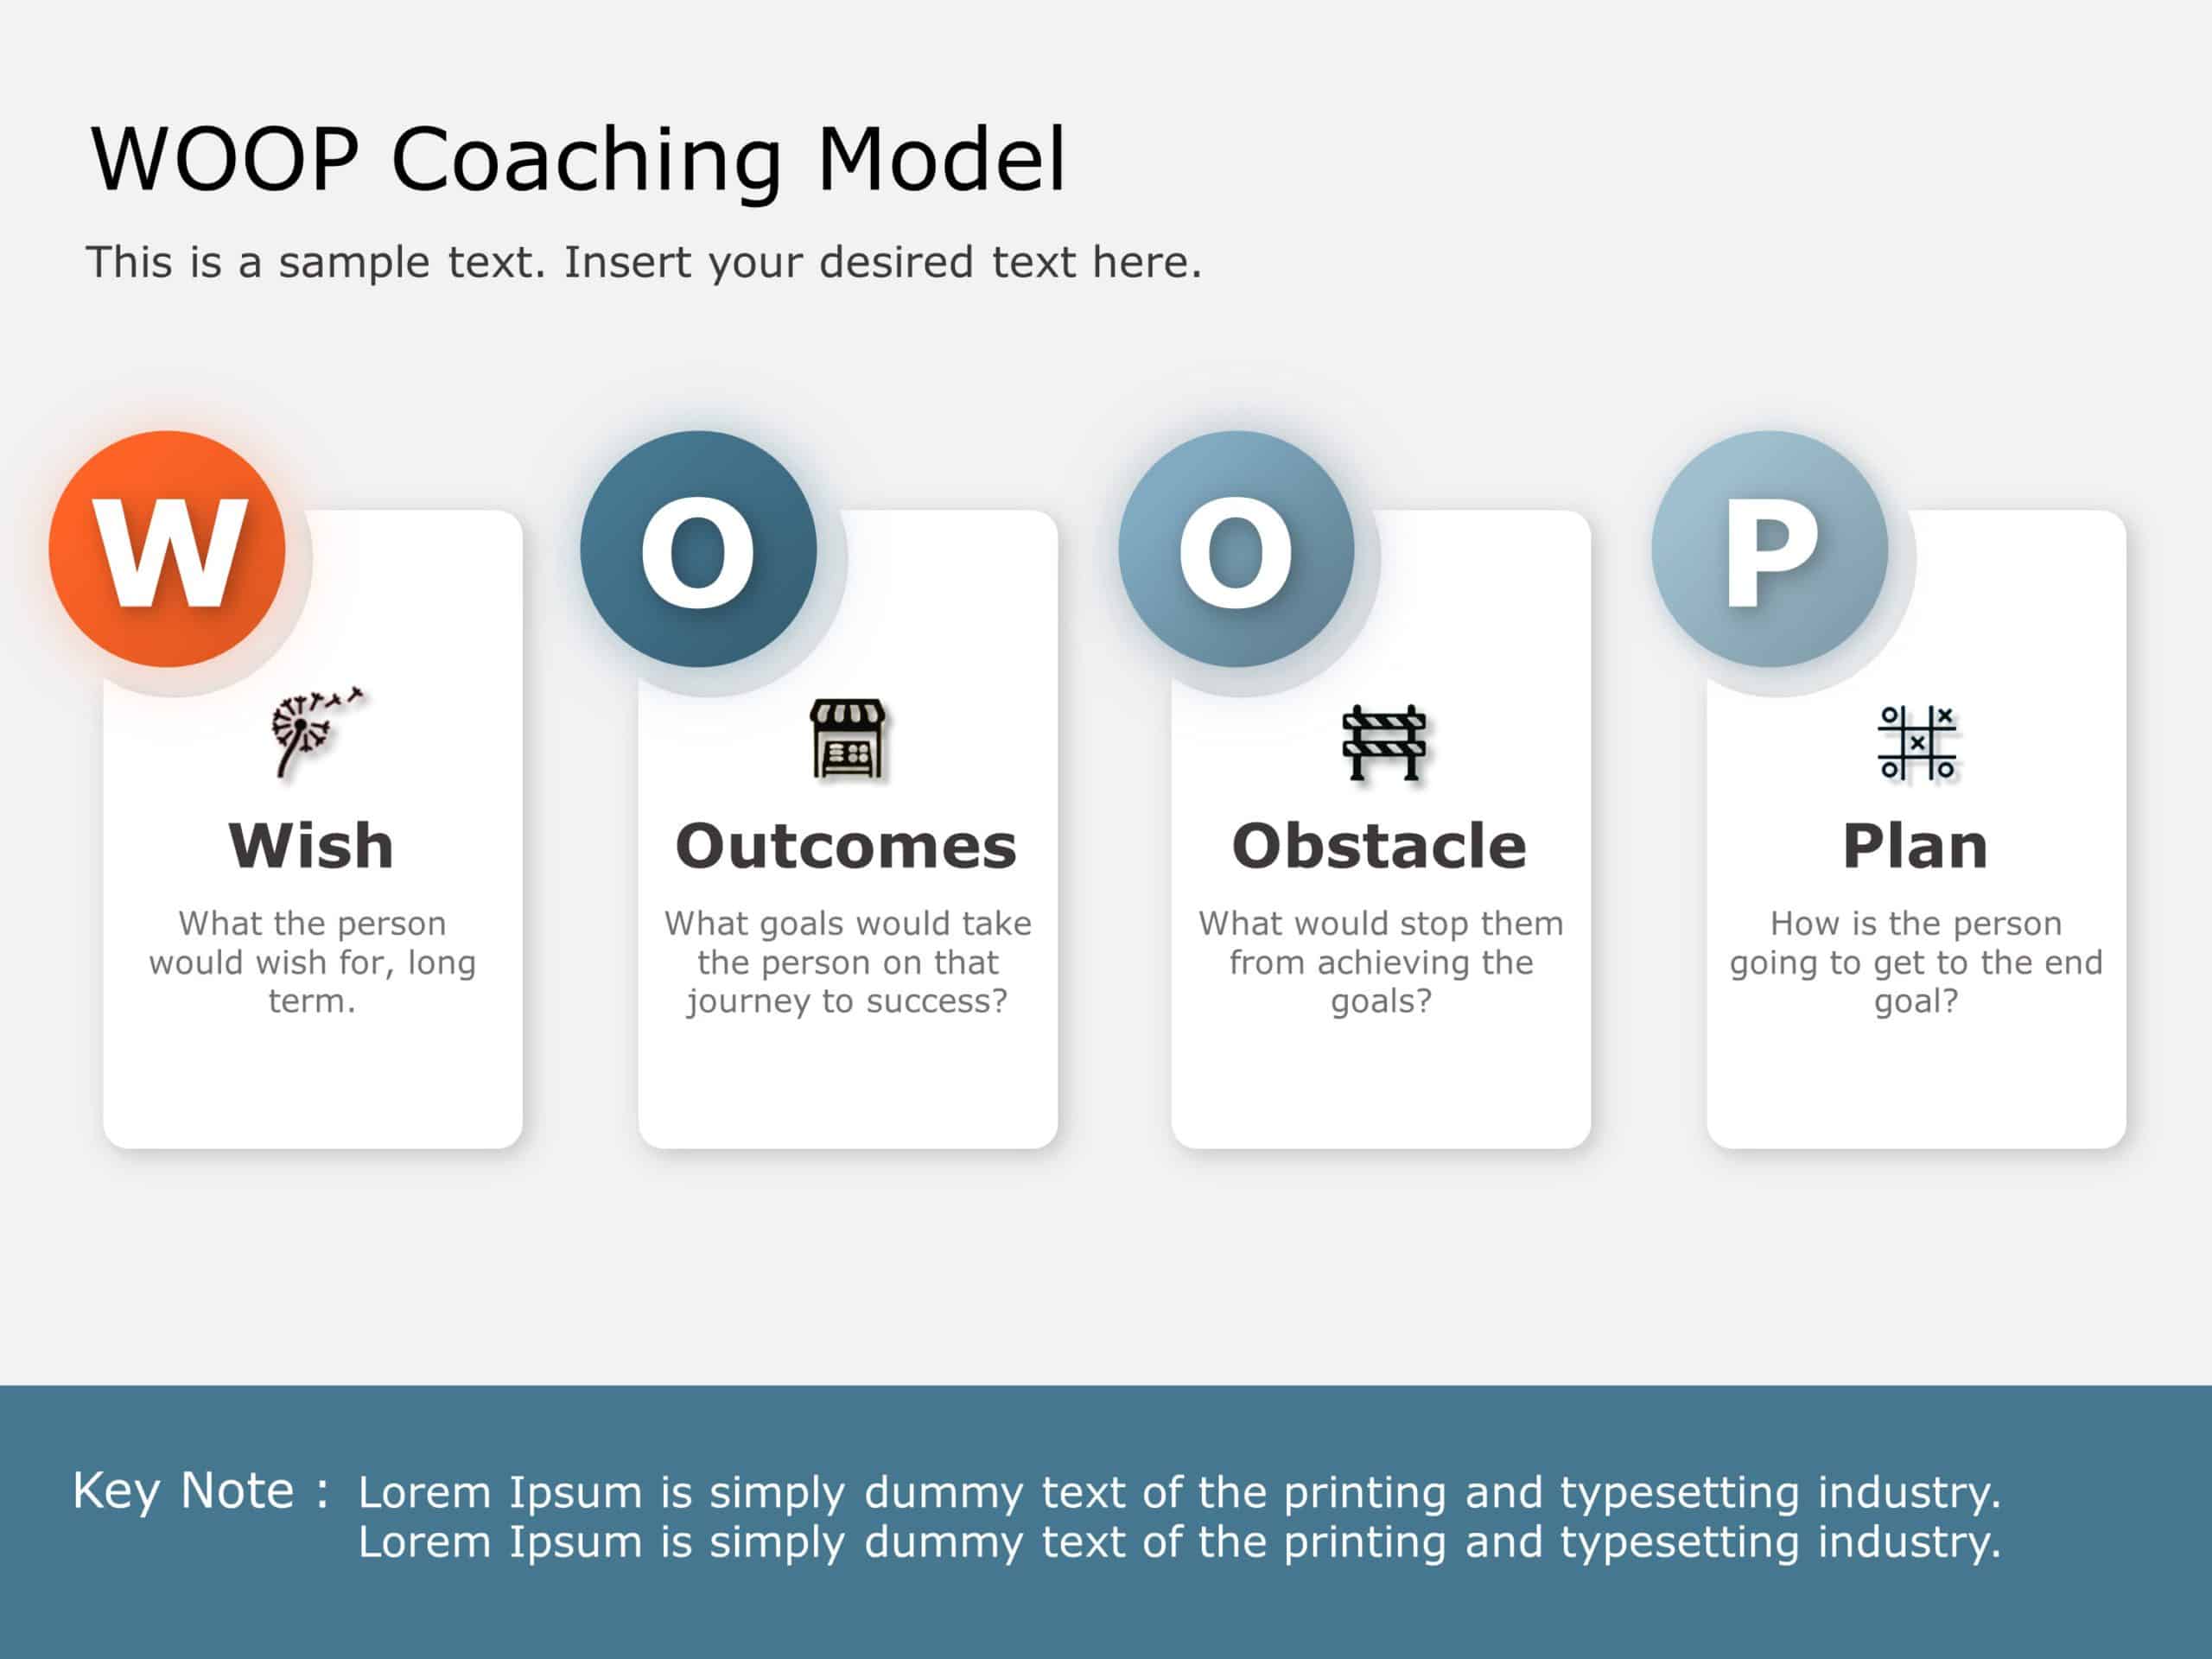 WOOP Coaching Model PowerPoint Template